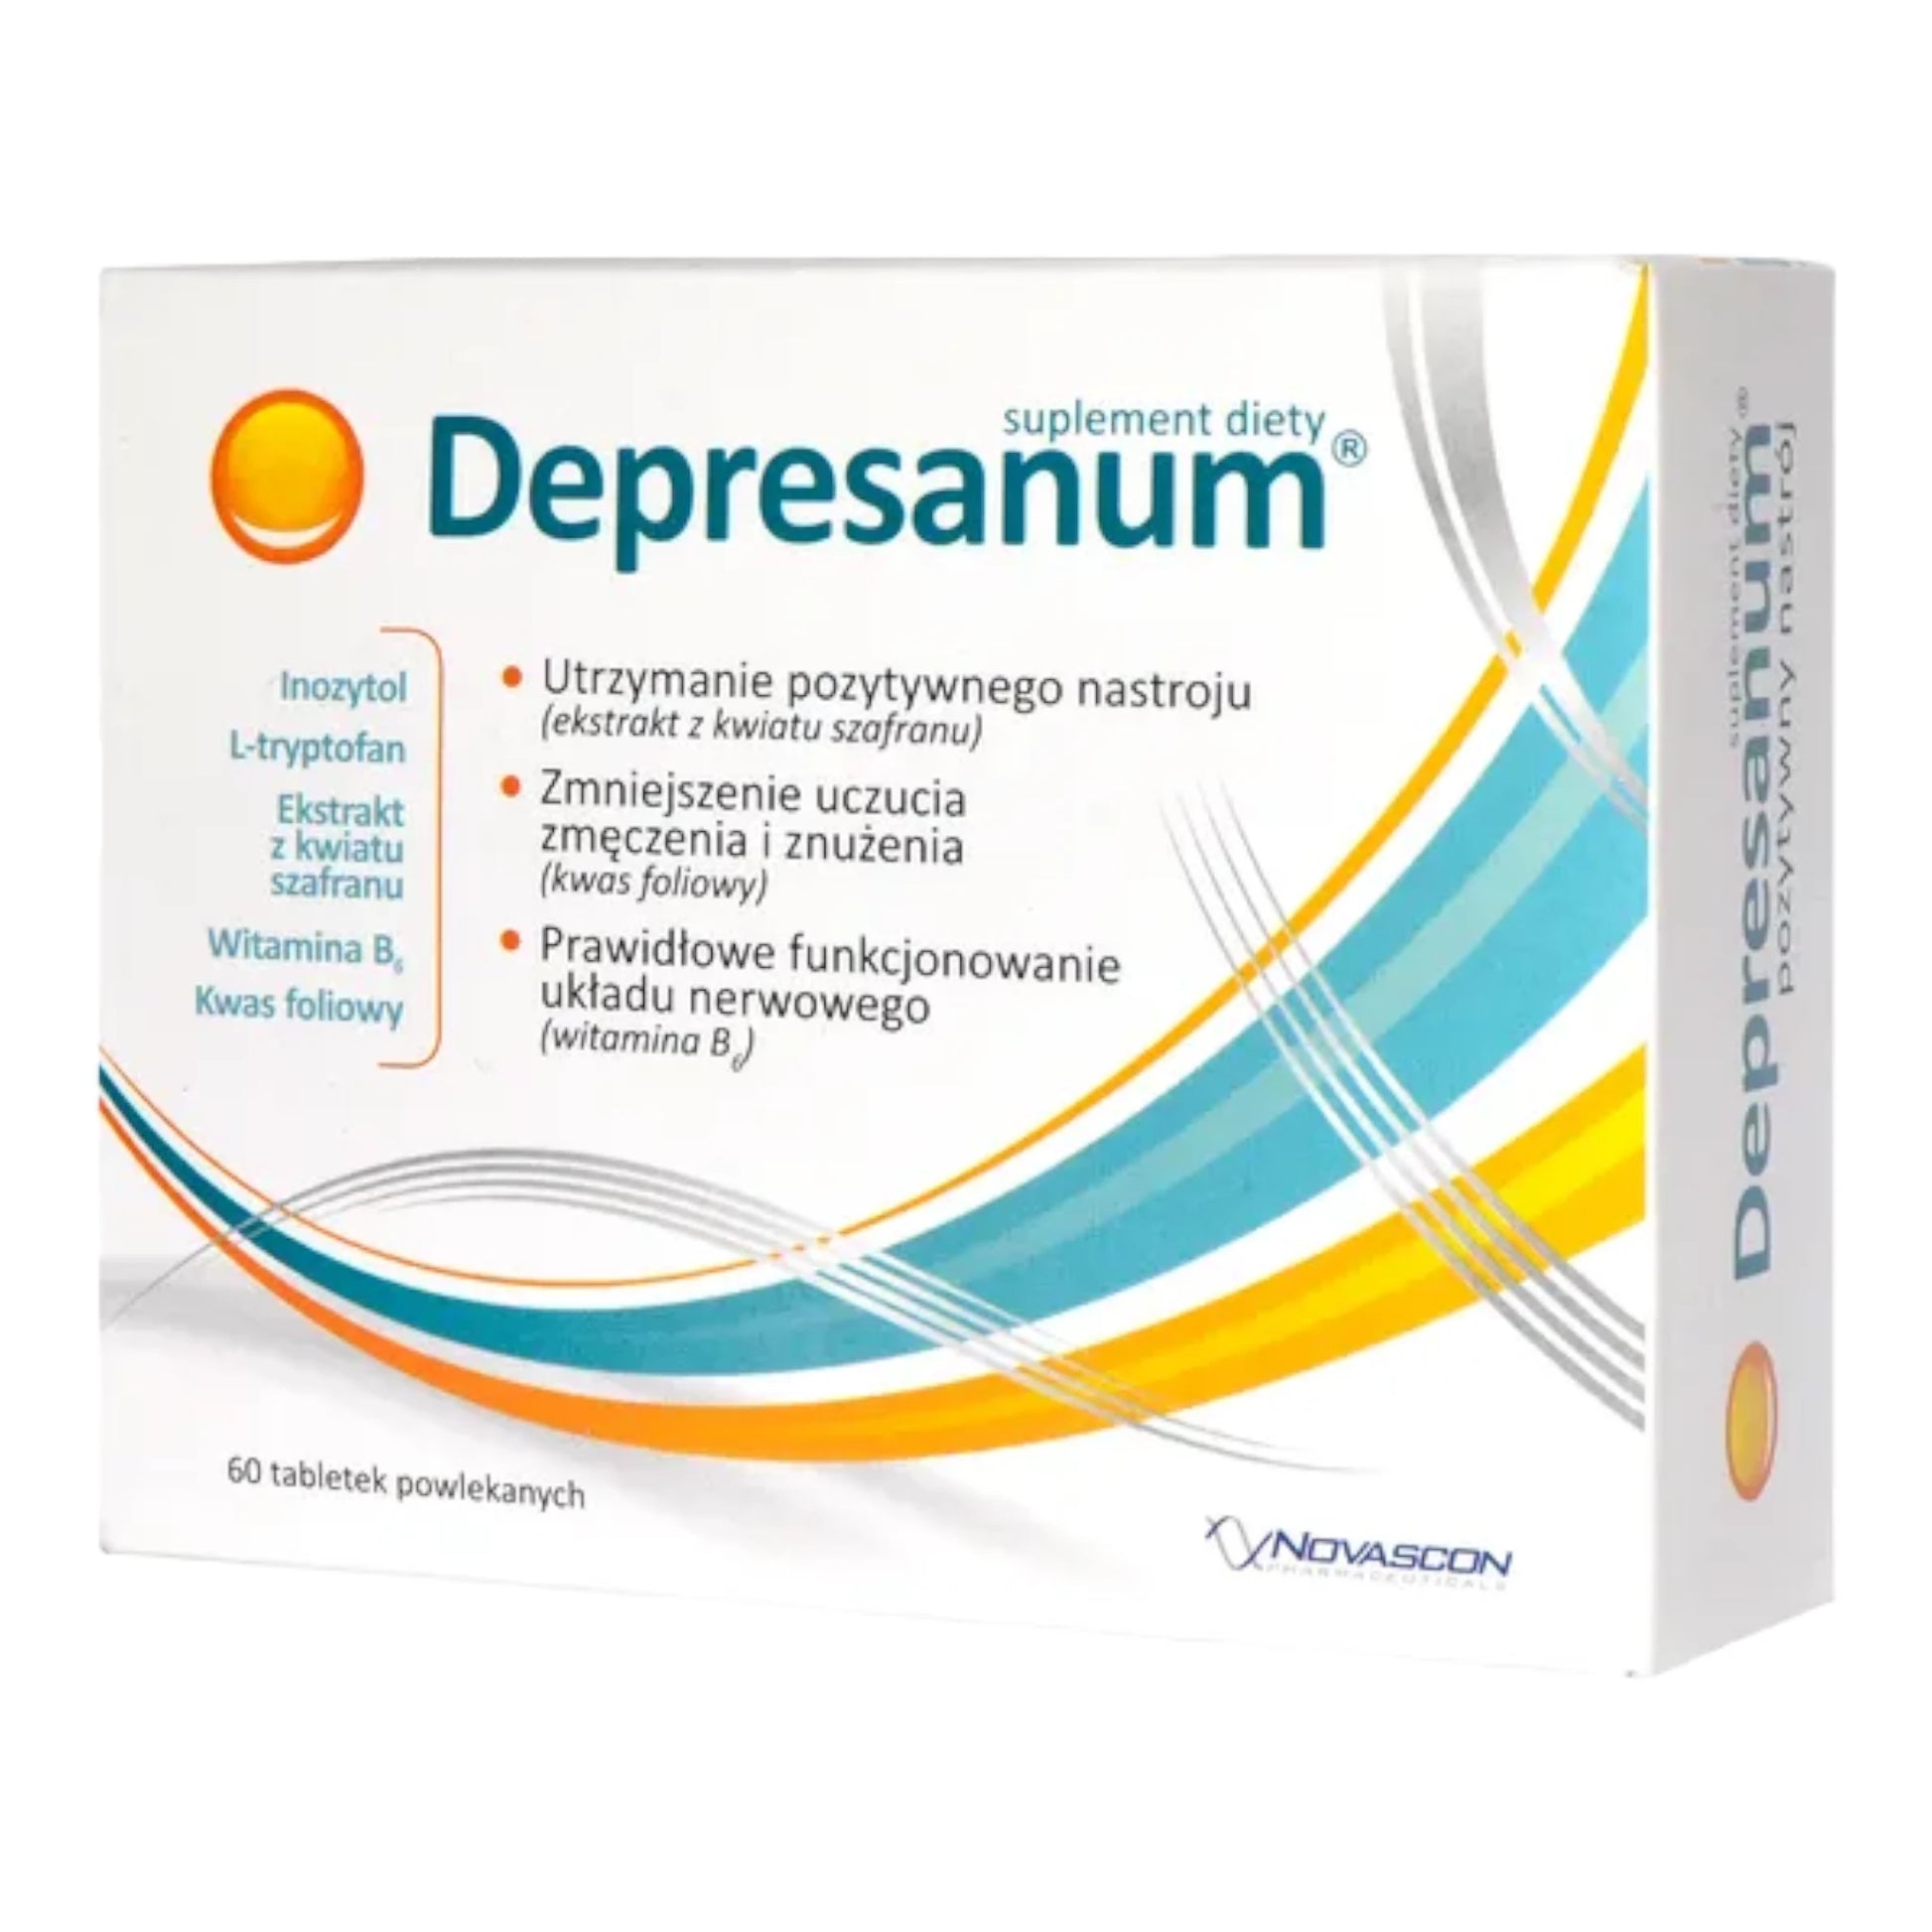 depresanum tablets